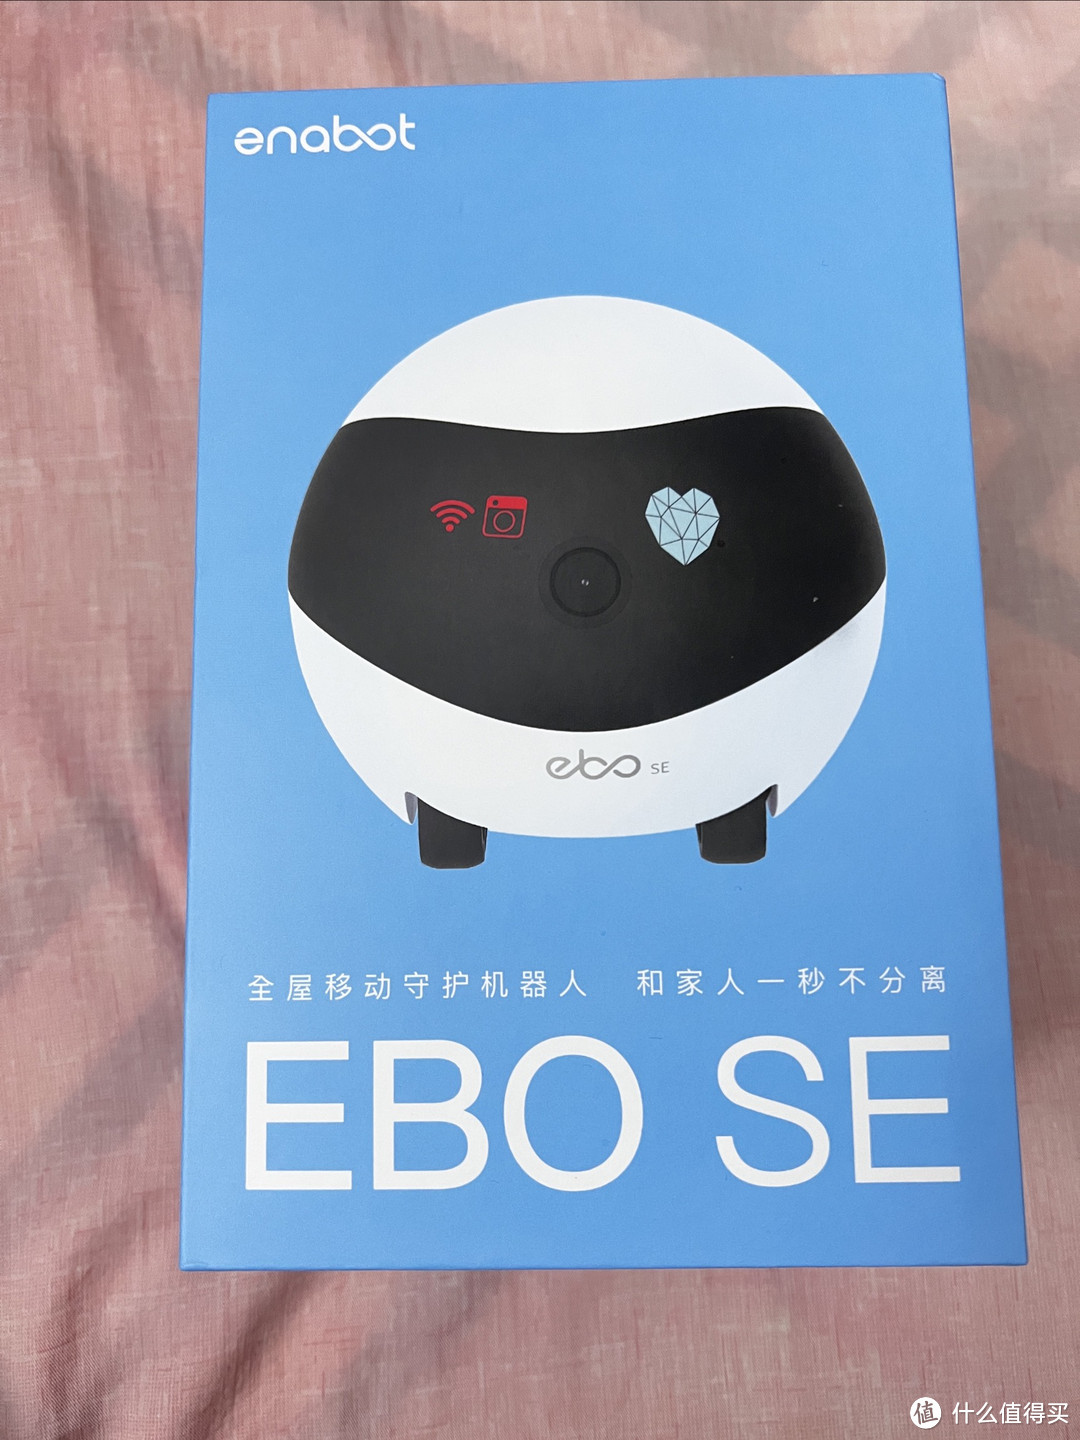 EBO SE 全屋移动监控摄像头：小身材大用途，守护家人宠物的智能安防利器